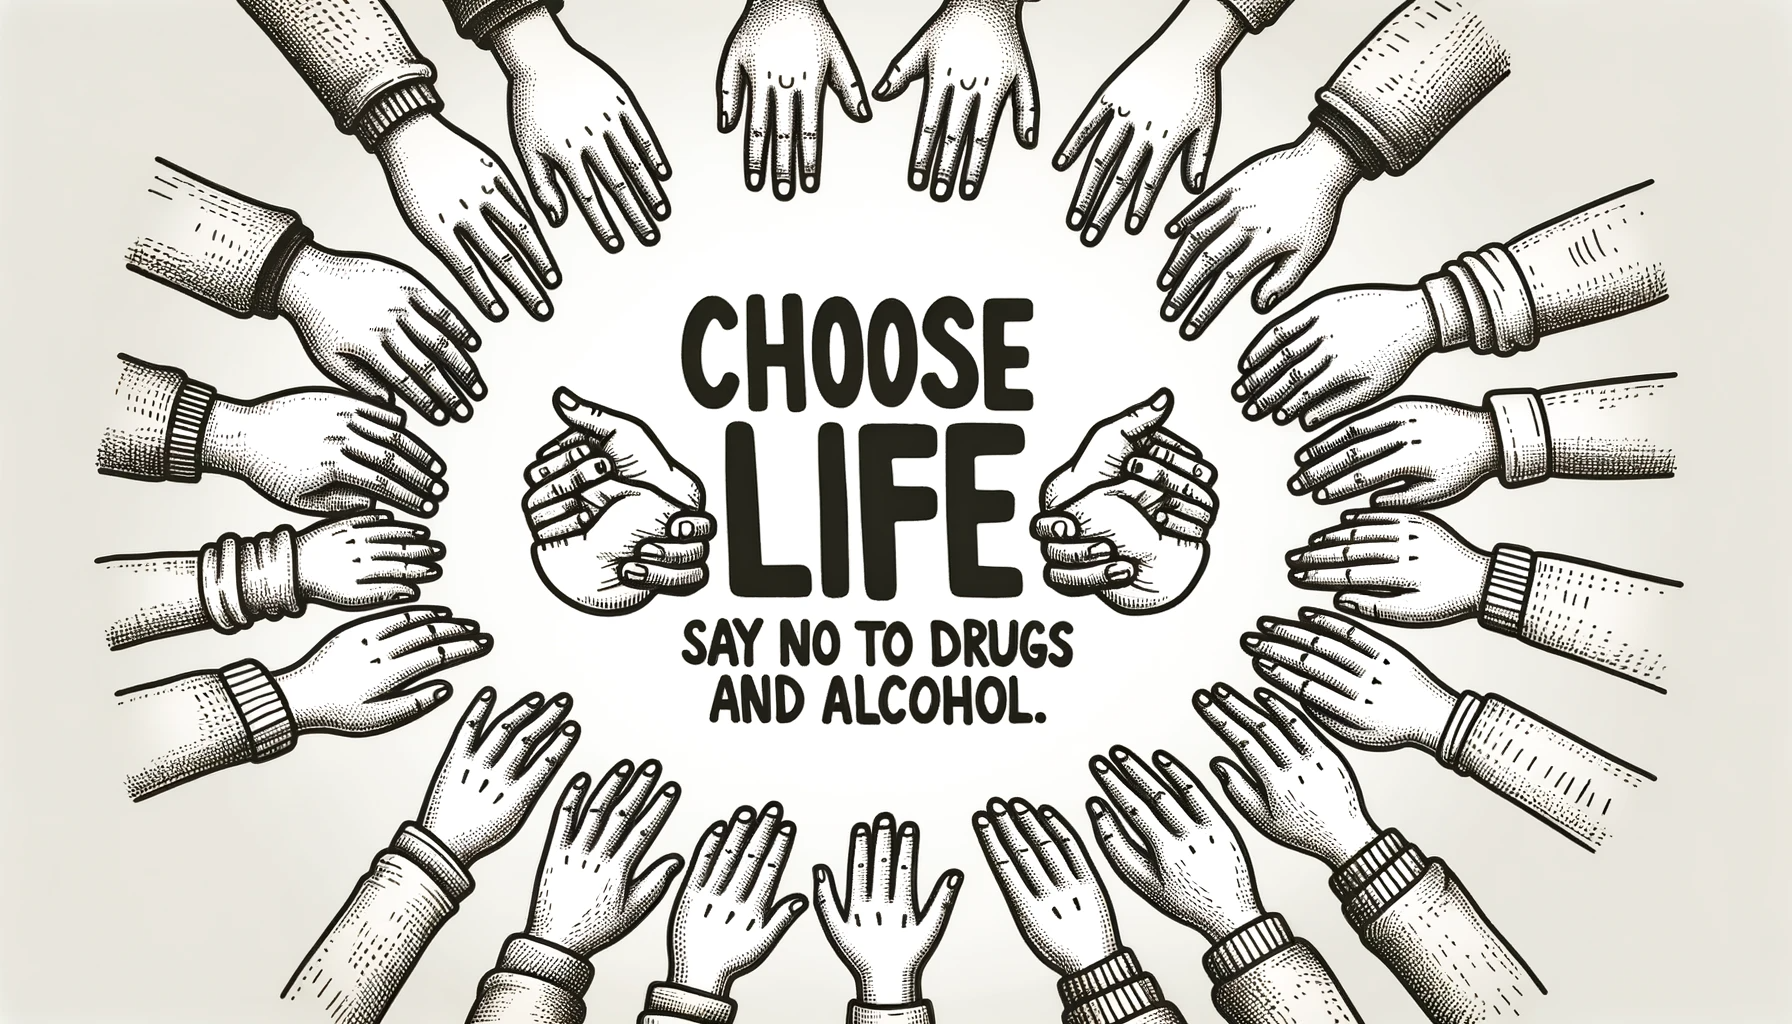 Diverse hands united against drug and alcohol use in Saskatoon, Saskatchewan - Holistic healing in drug and alcohol treatment in Saskatoon, Saskatchewan.